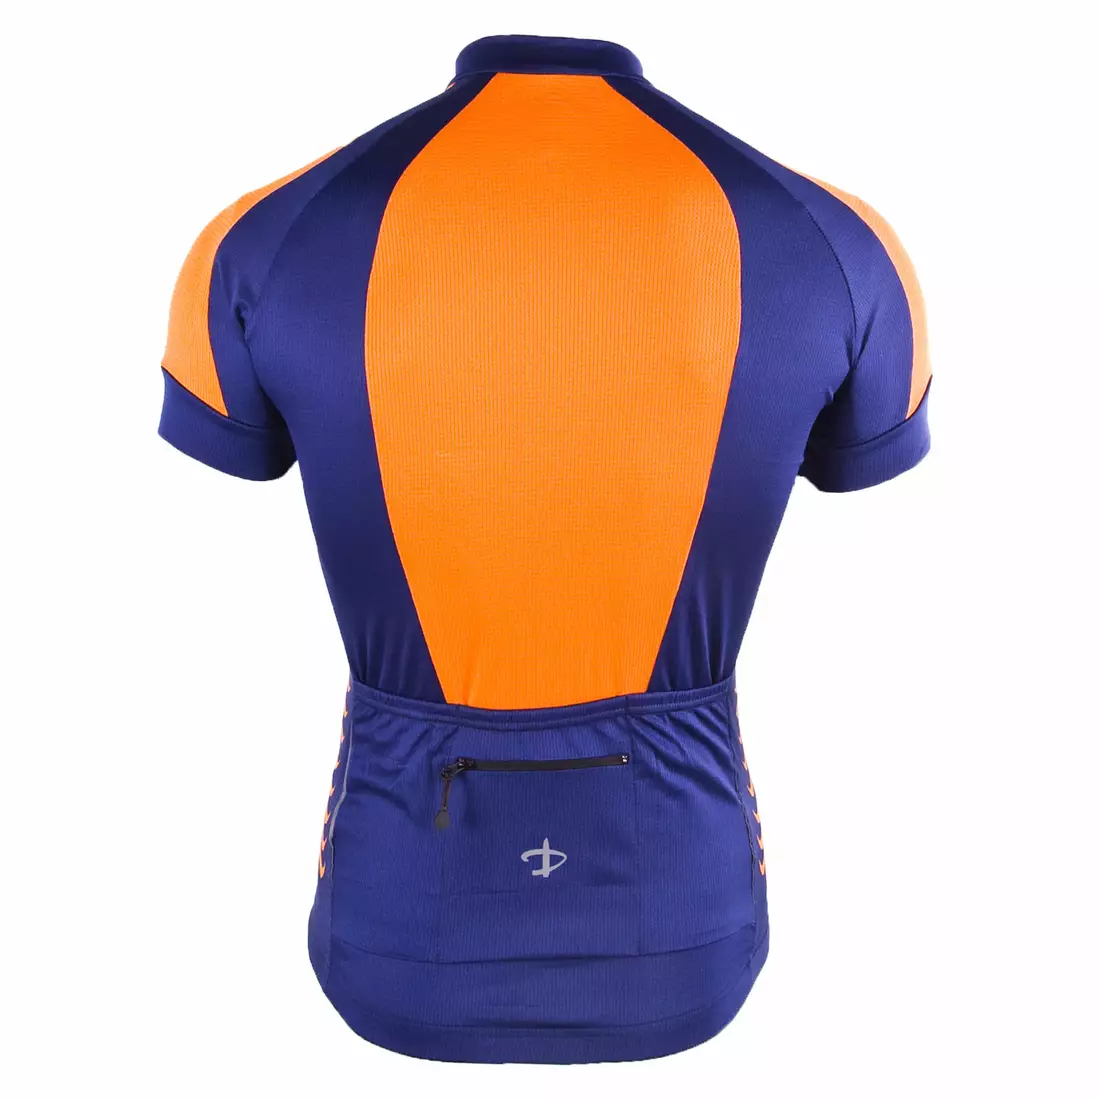 DEKO WHITE Navy blue and orange cycling jersey